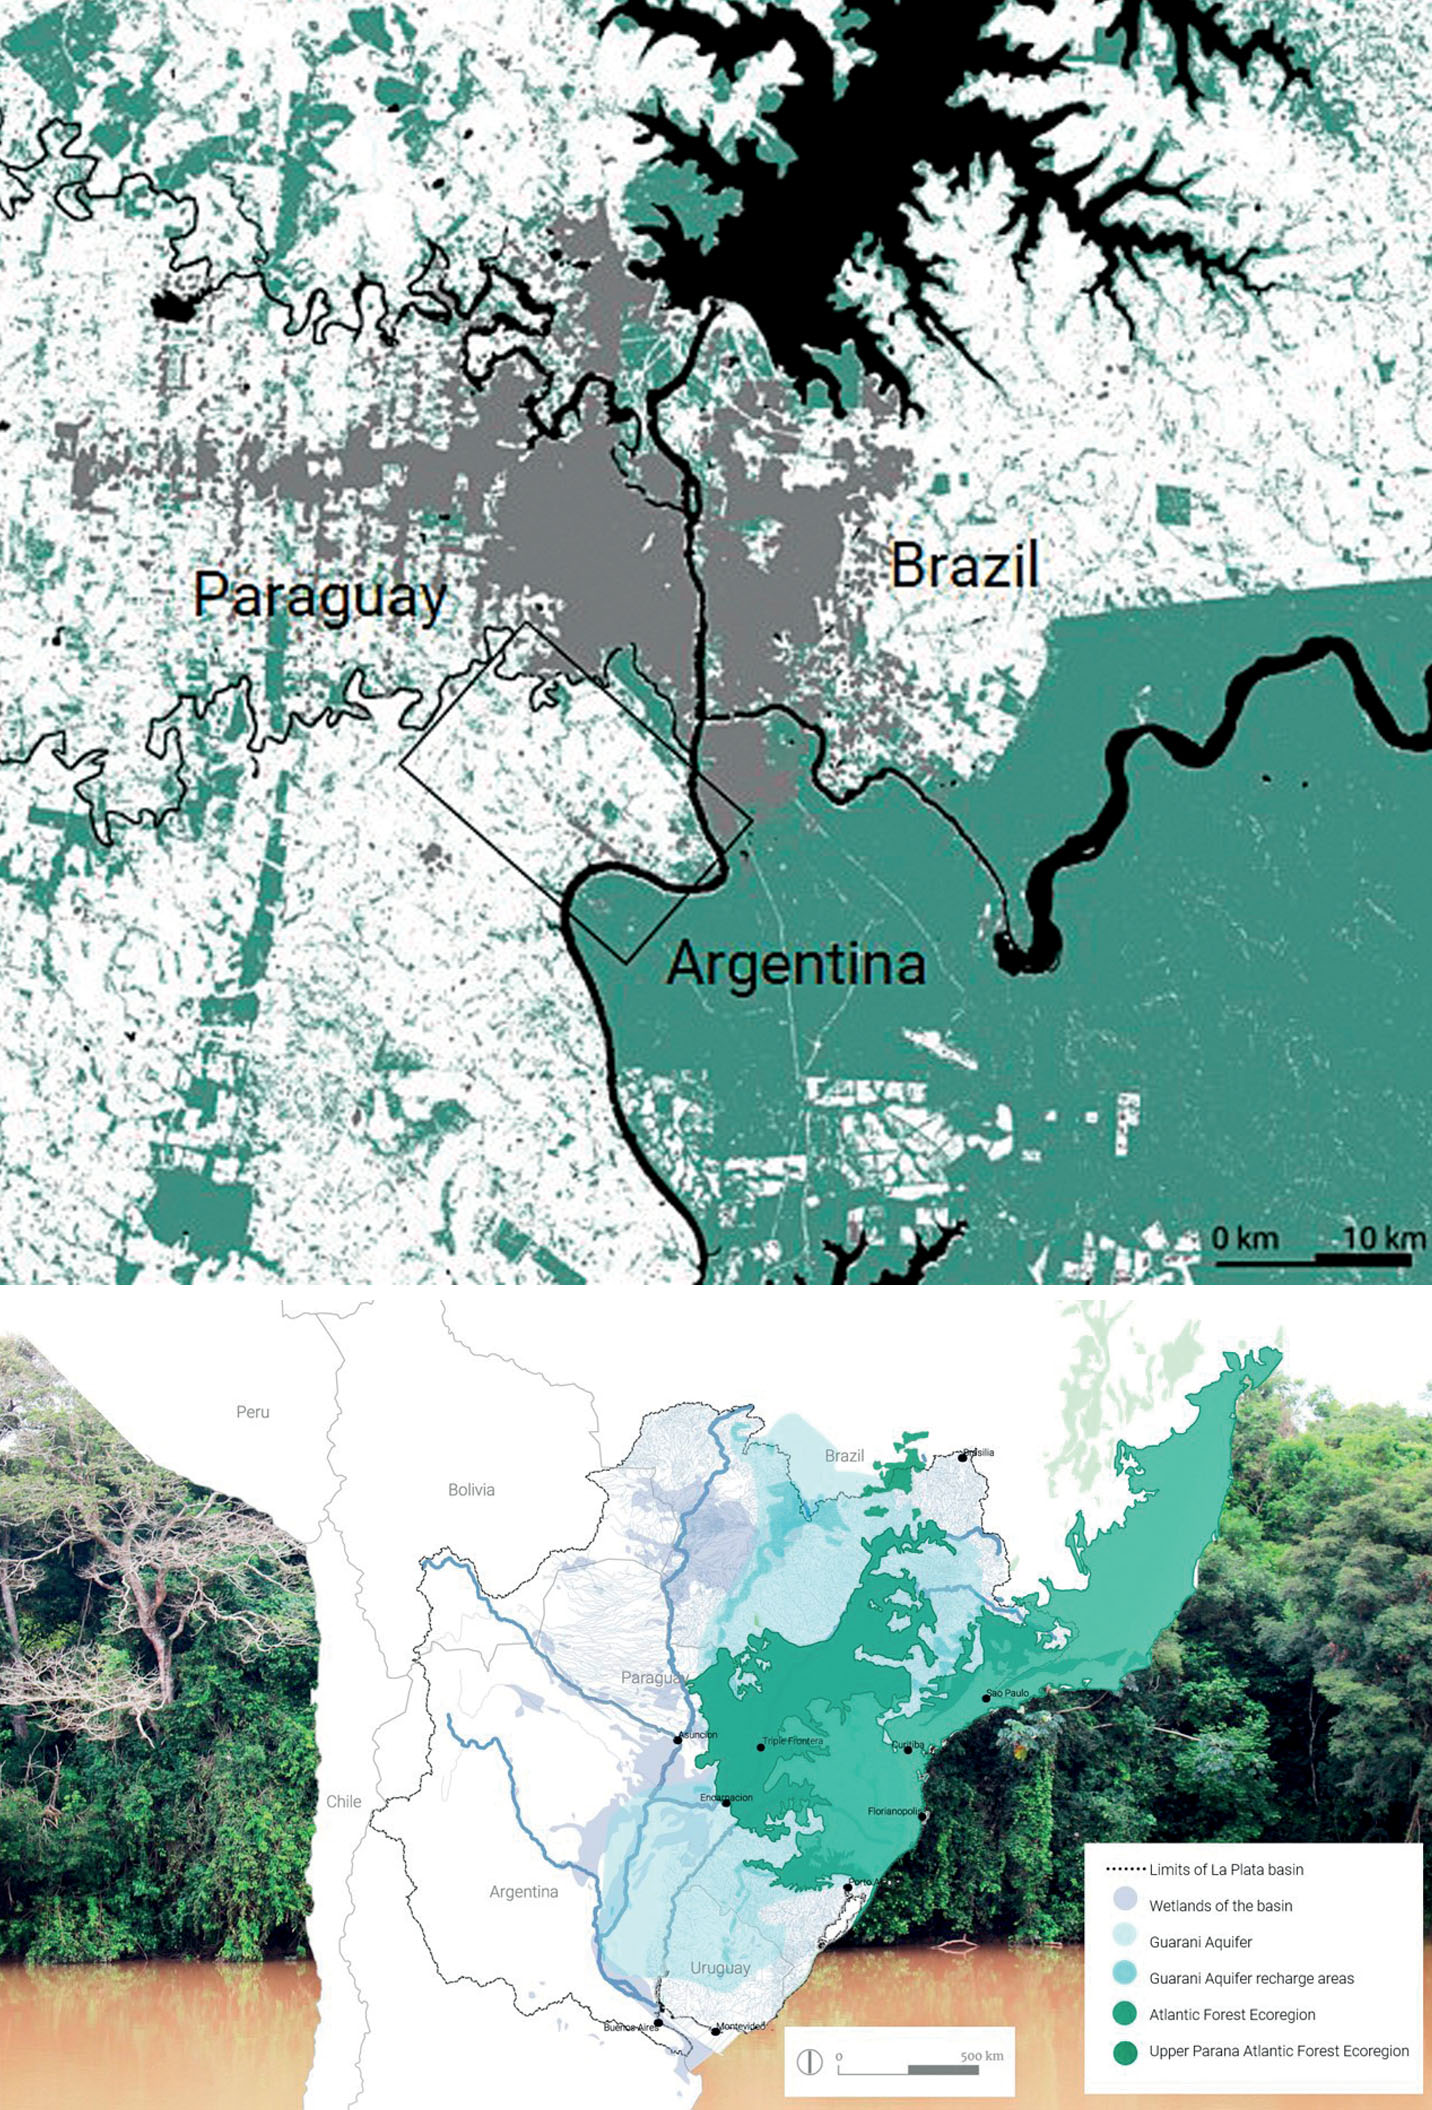 landscape-urbanism-perspective-truly-inclusive-city-triple-frontera-tri-national-metropolitan-area-south-american-continent-guarani-territory-beyond-geopolitical-boundaries